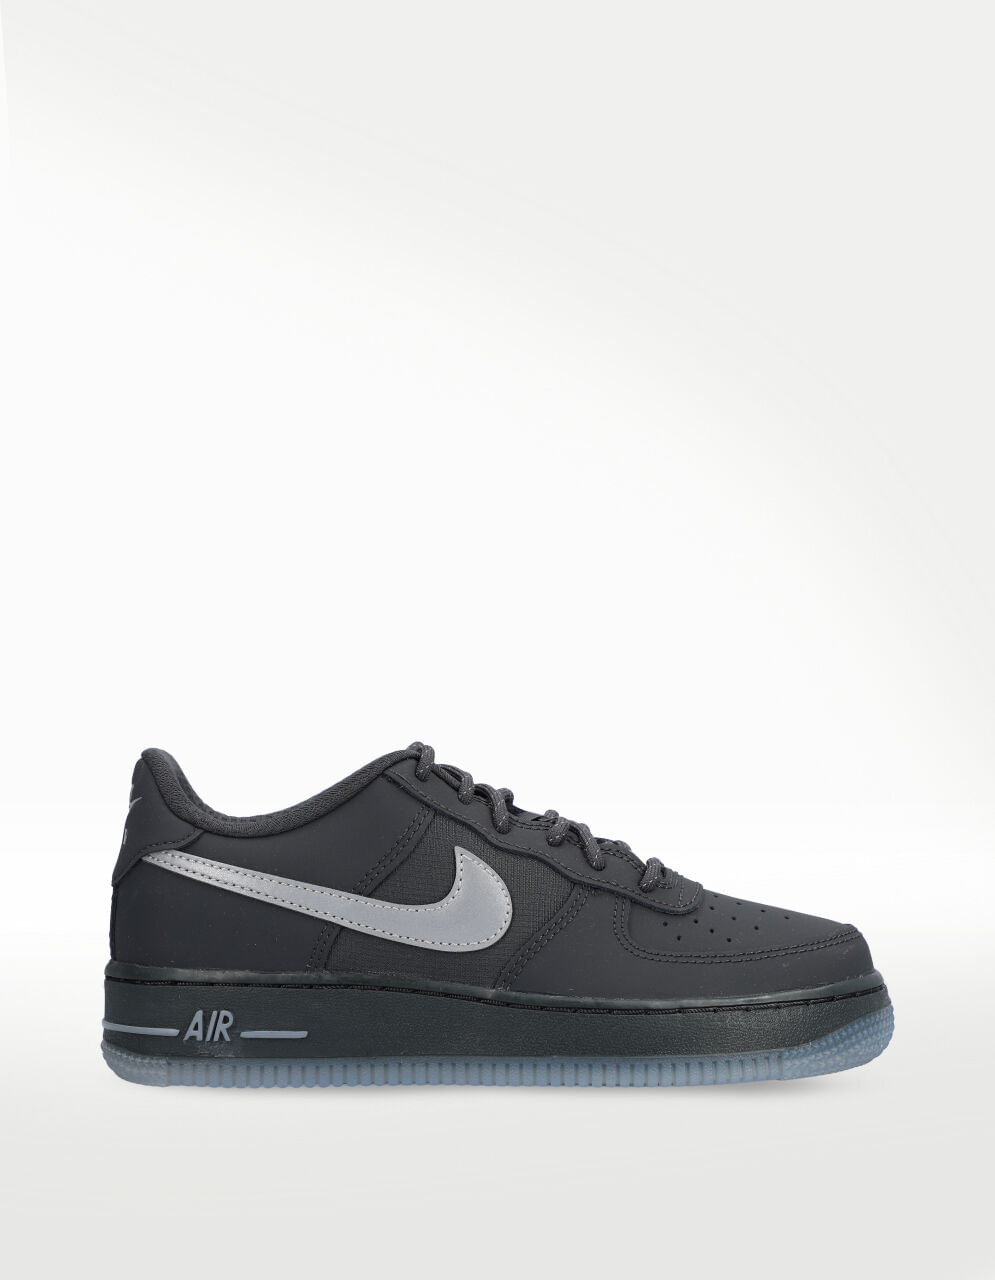 Tenis Nike Air Force 1 Gs W, Calzado